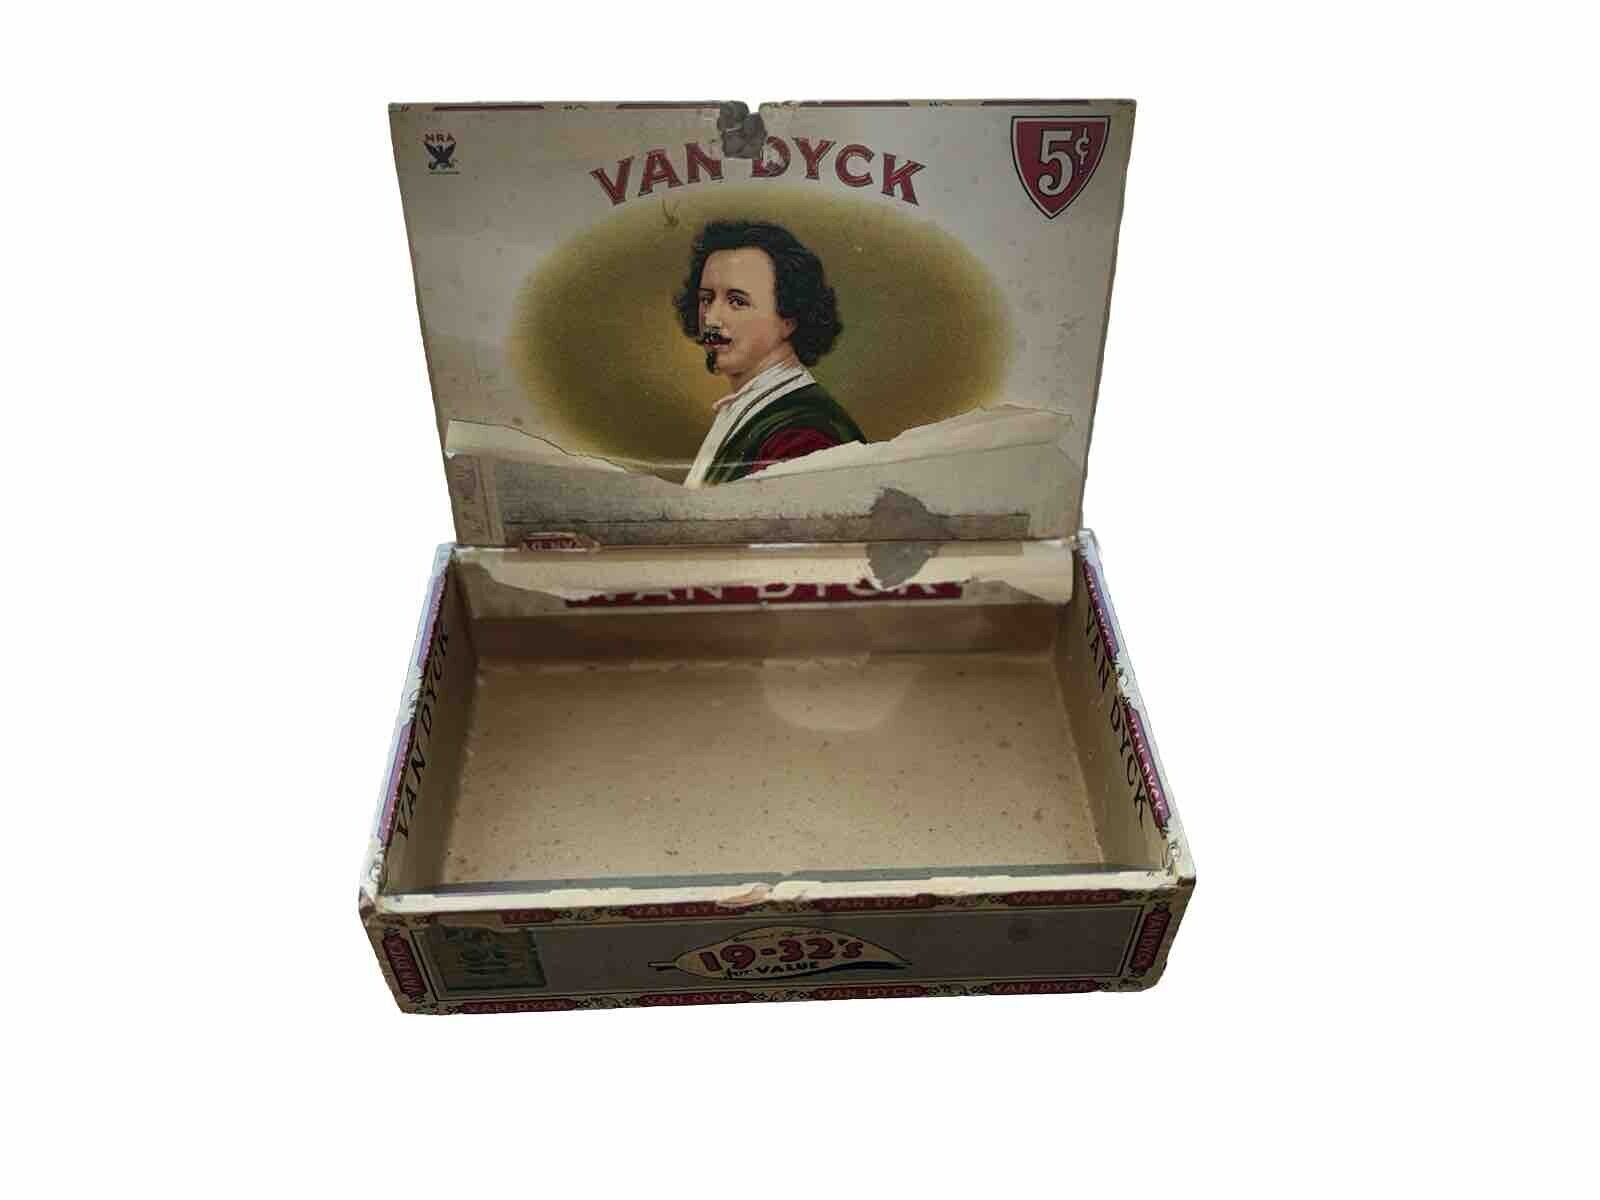 Van Dyck Cigar Box 1930s Tax Stamp General Cigar Co. Vintage